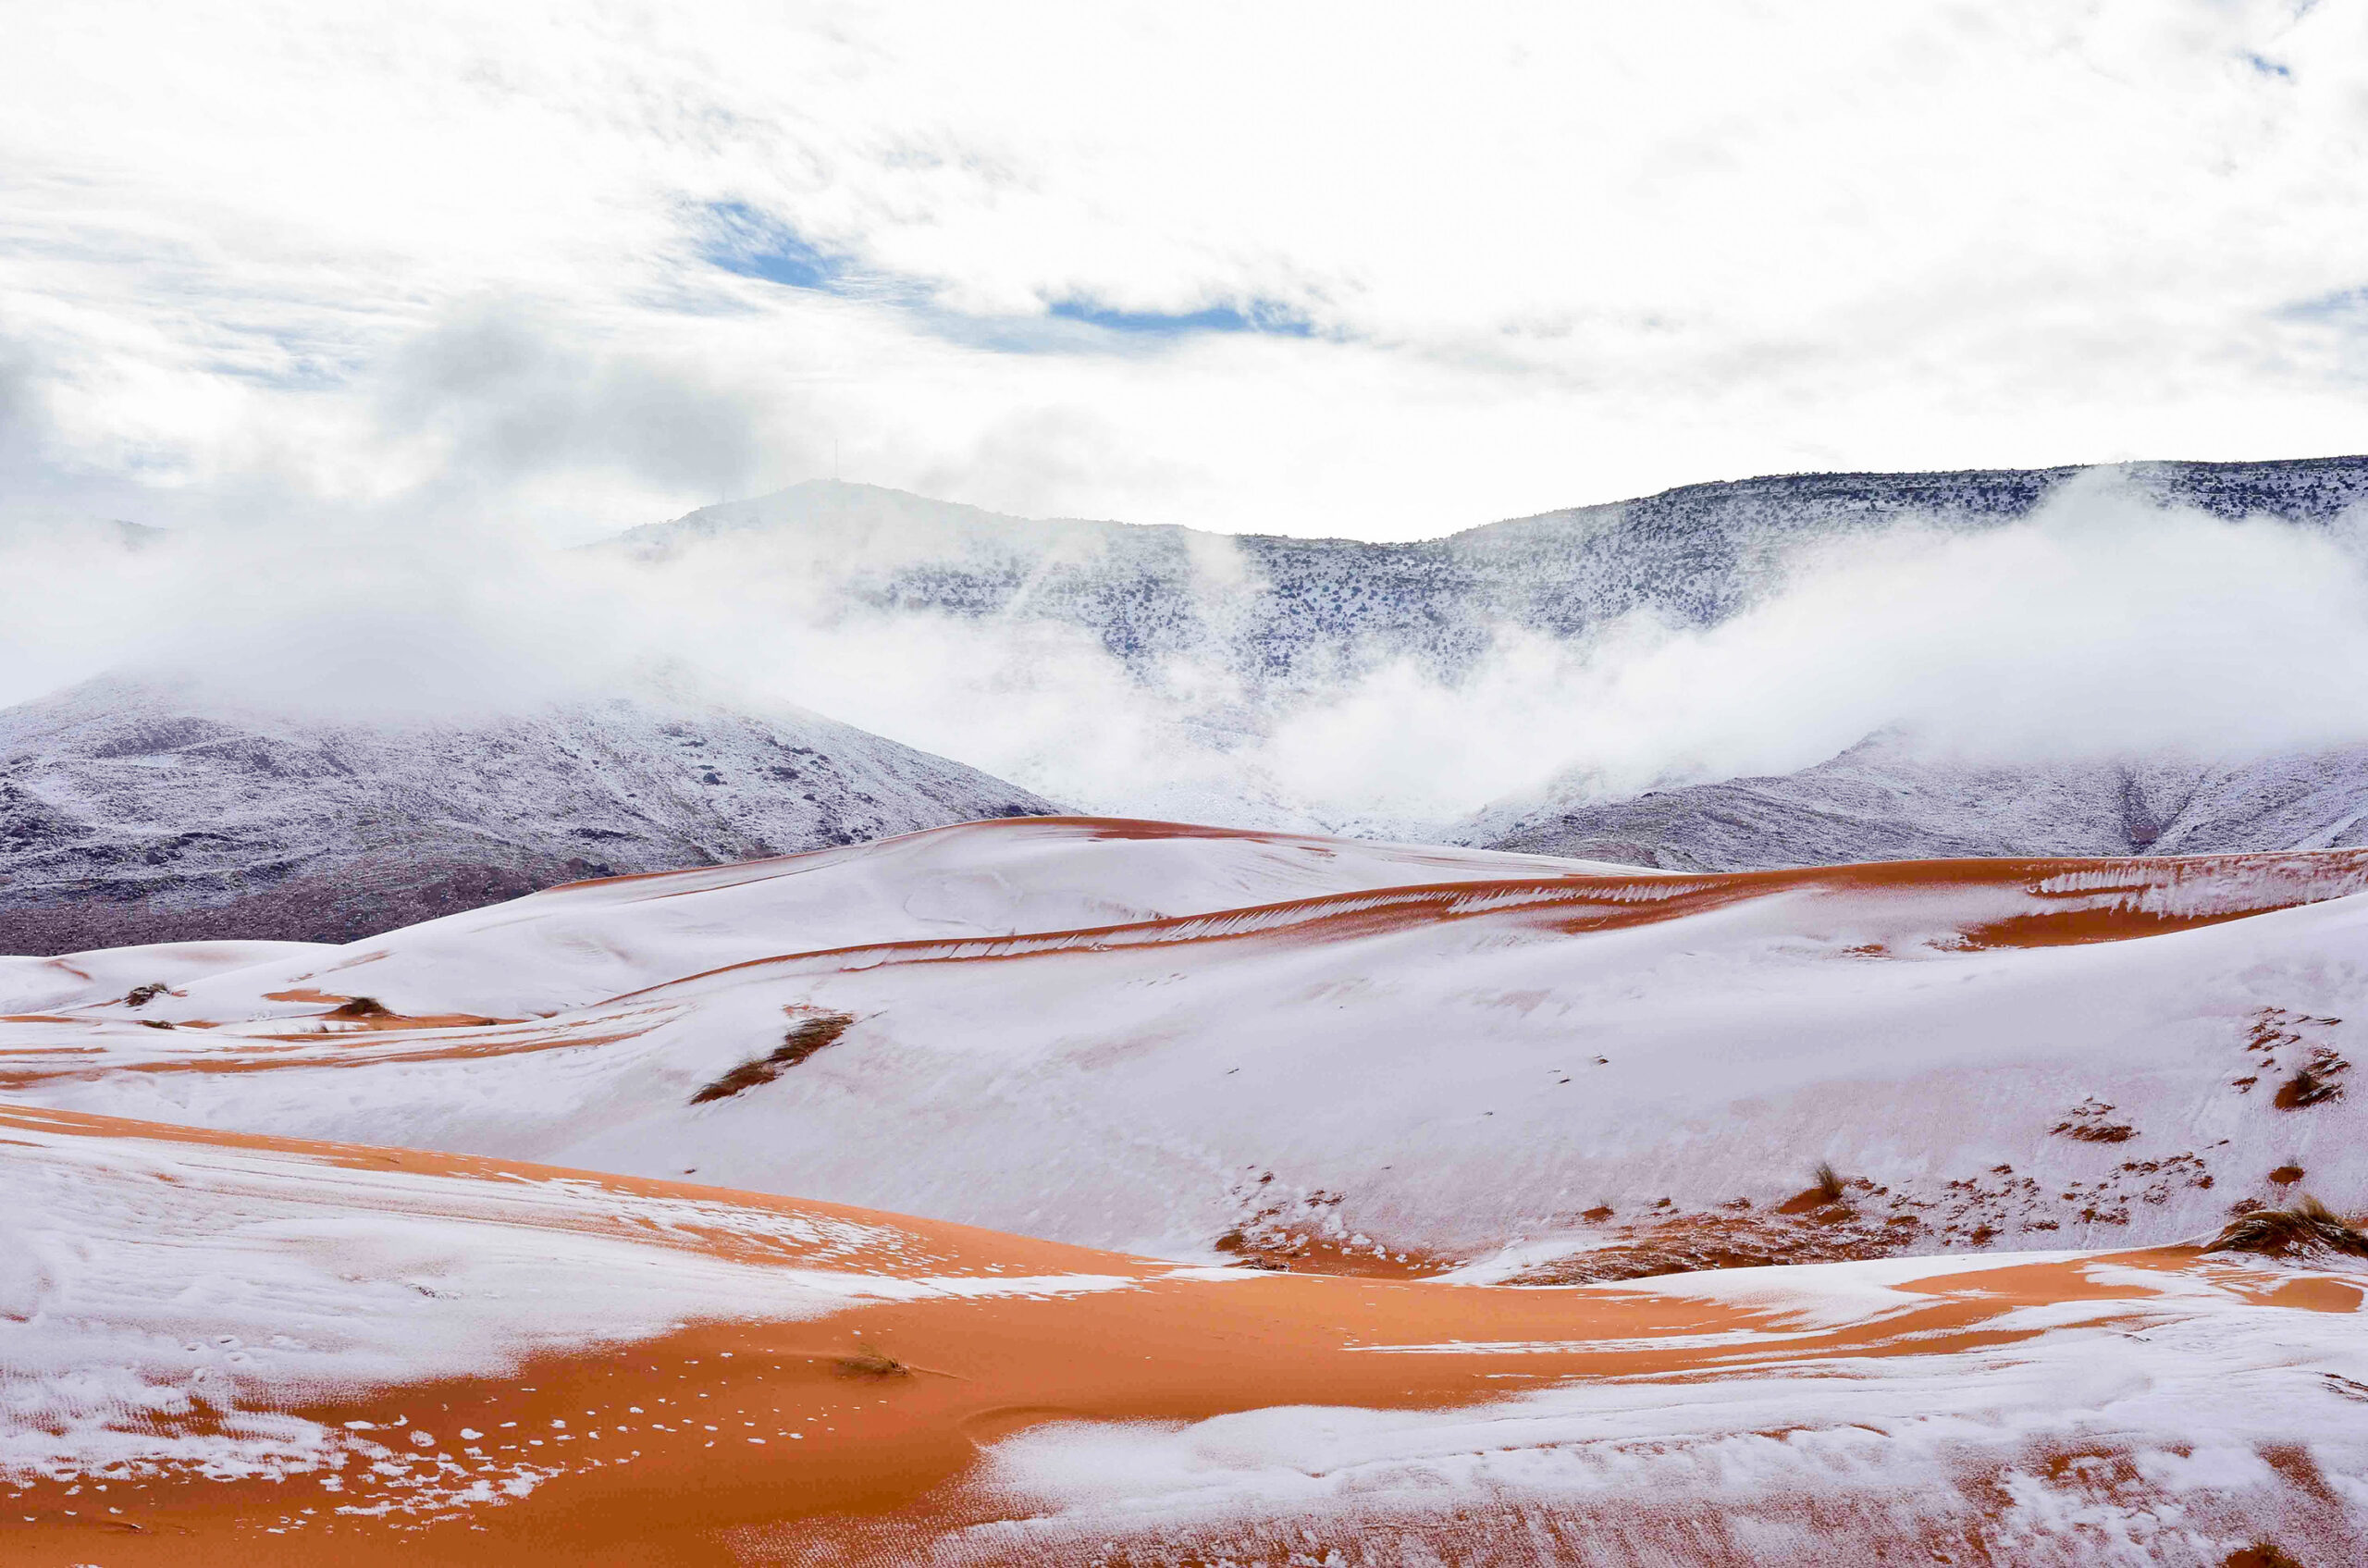 Snow-Clad Dunes Witnessed in the Sahara Desert